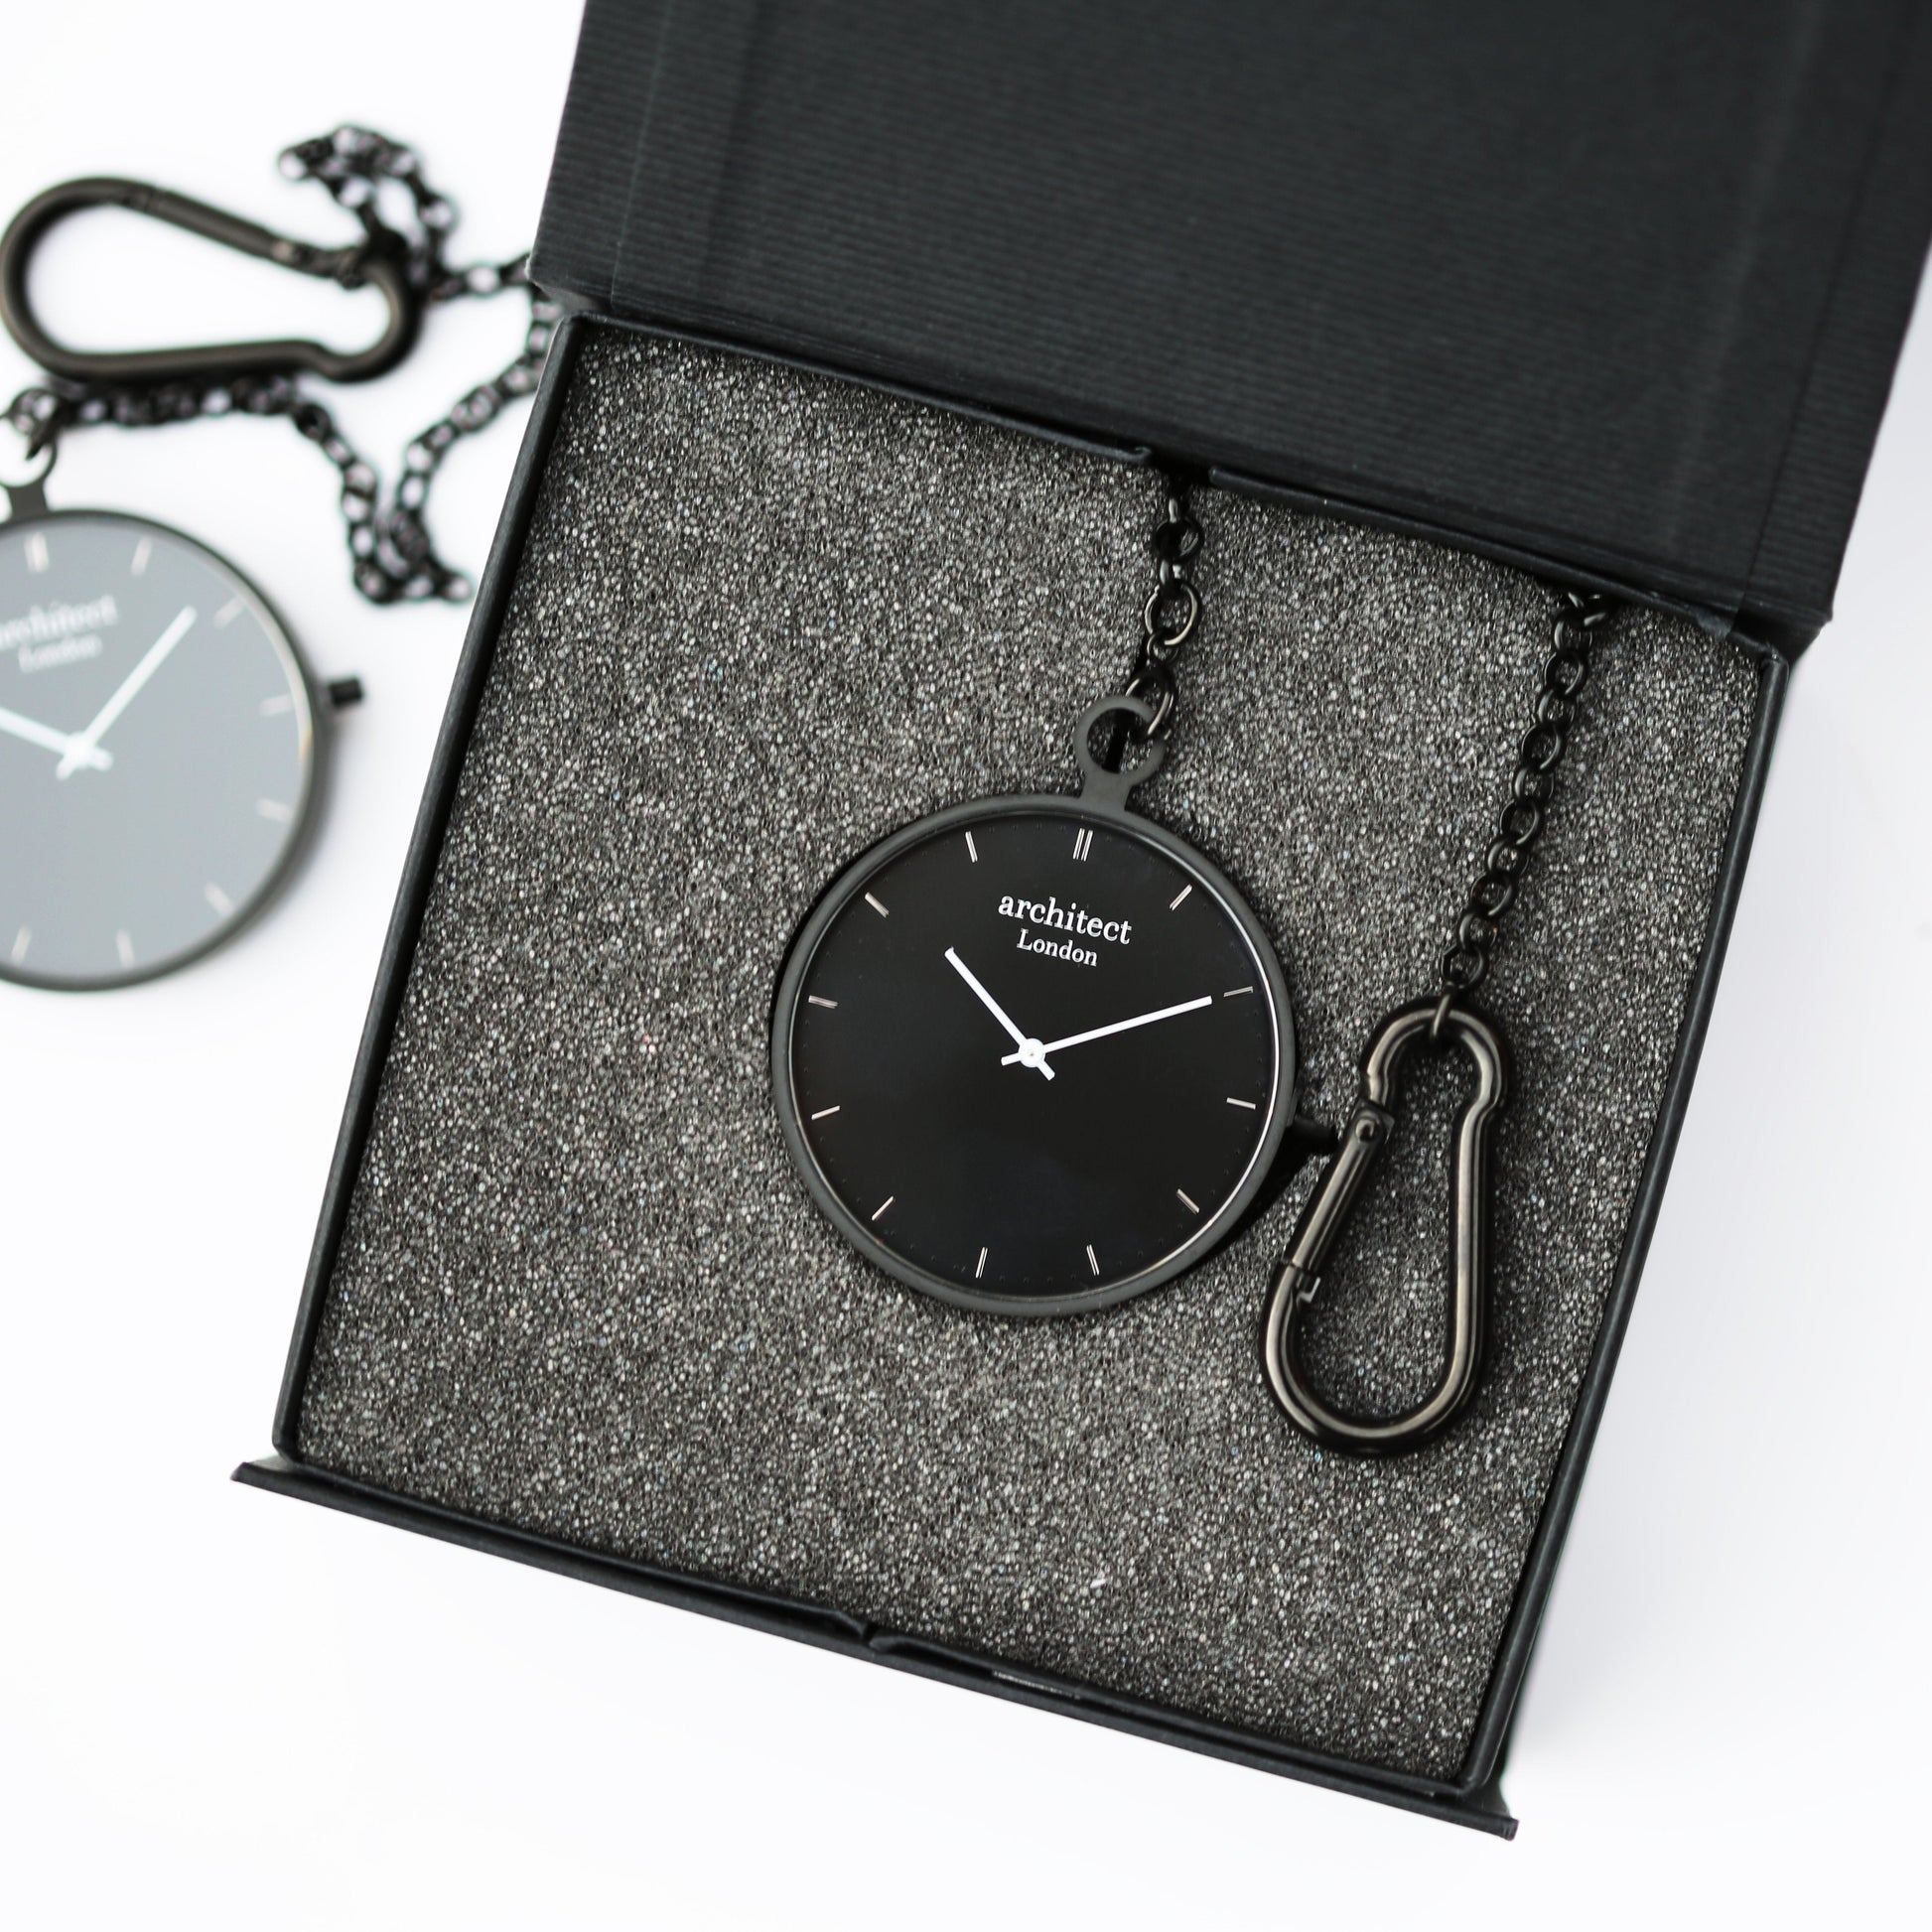 Personalized Pocket Watches - Modern Pocket Watch Black - Modern Font Engraving 